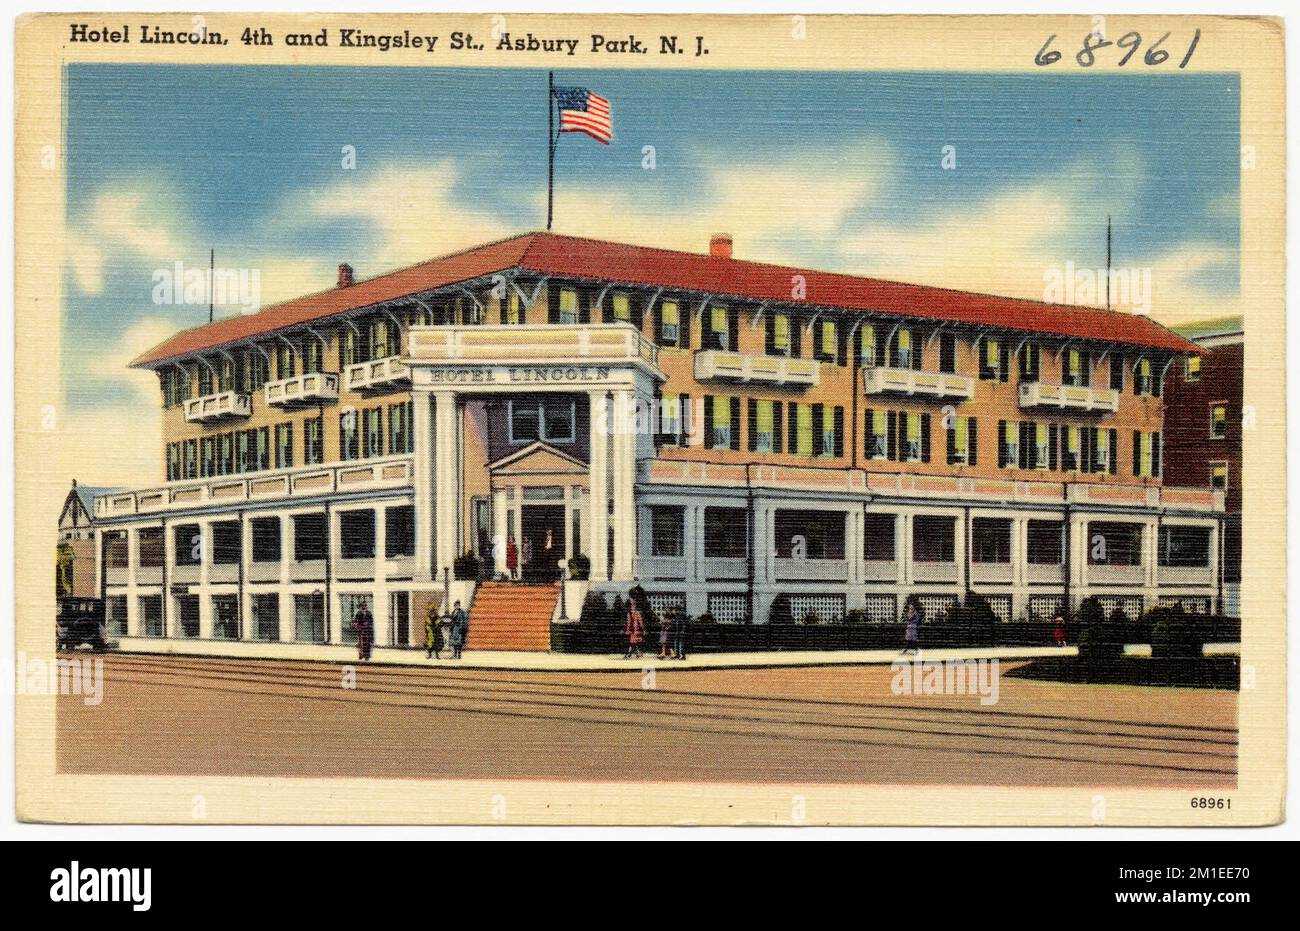 Hotel Lincoln, 4th and Kingsley St., Asbury Park, N. J., Hotels, Tichnor Brothers Collection, Cartoline degli Stati Uniti Foto Stock